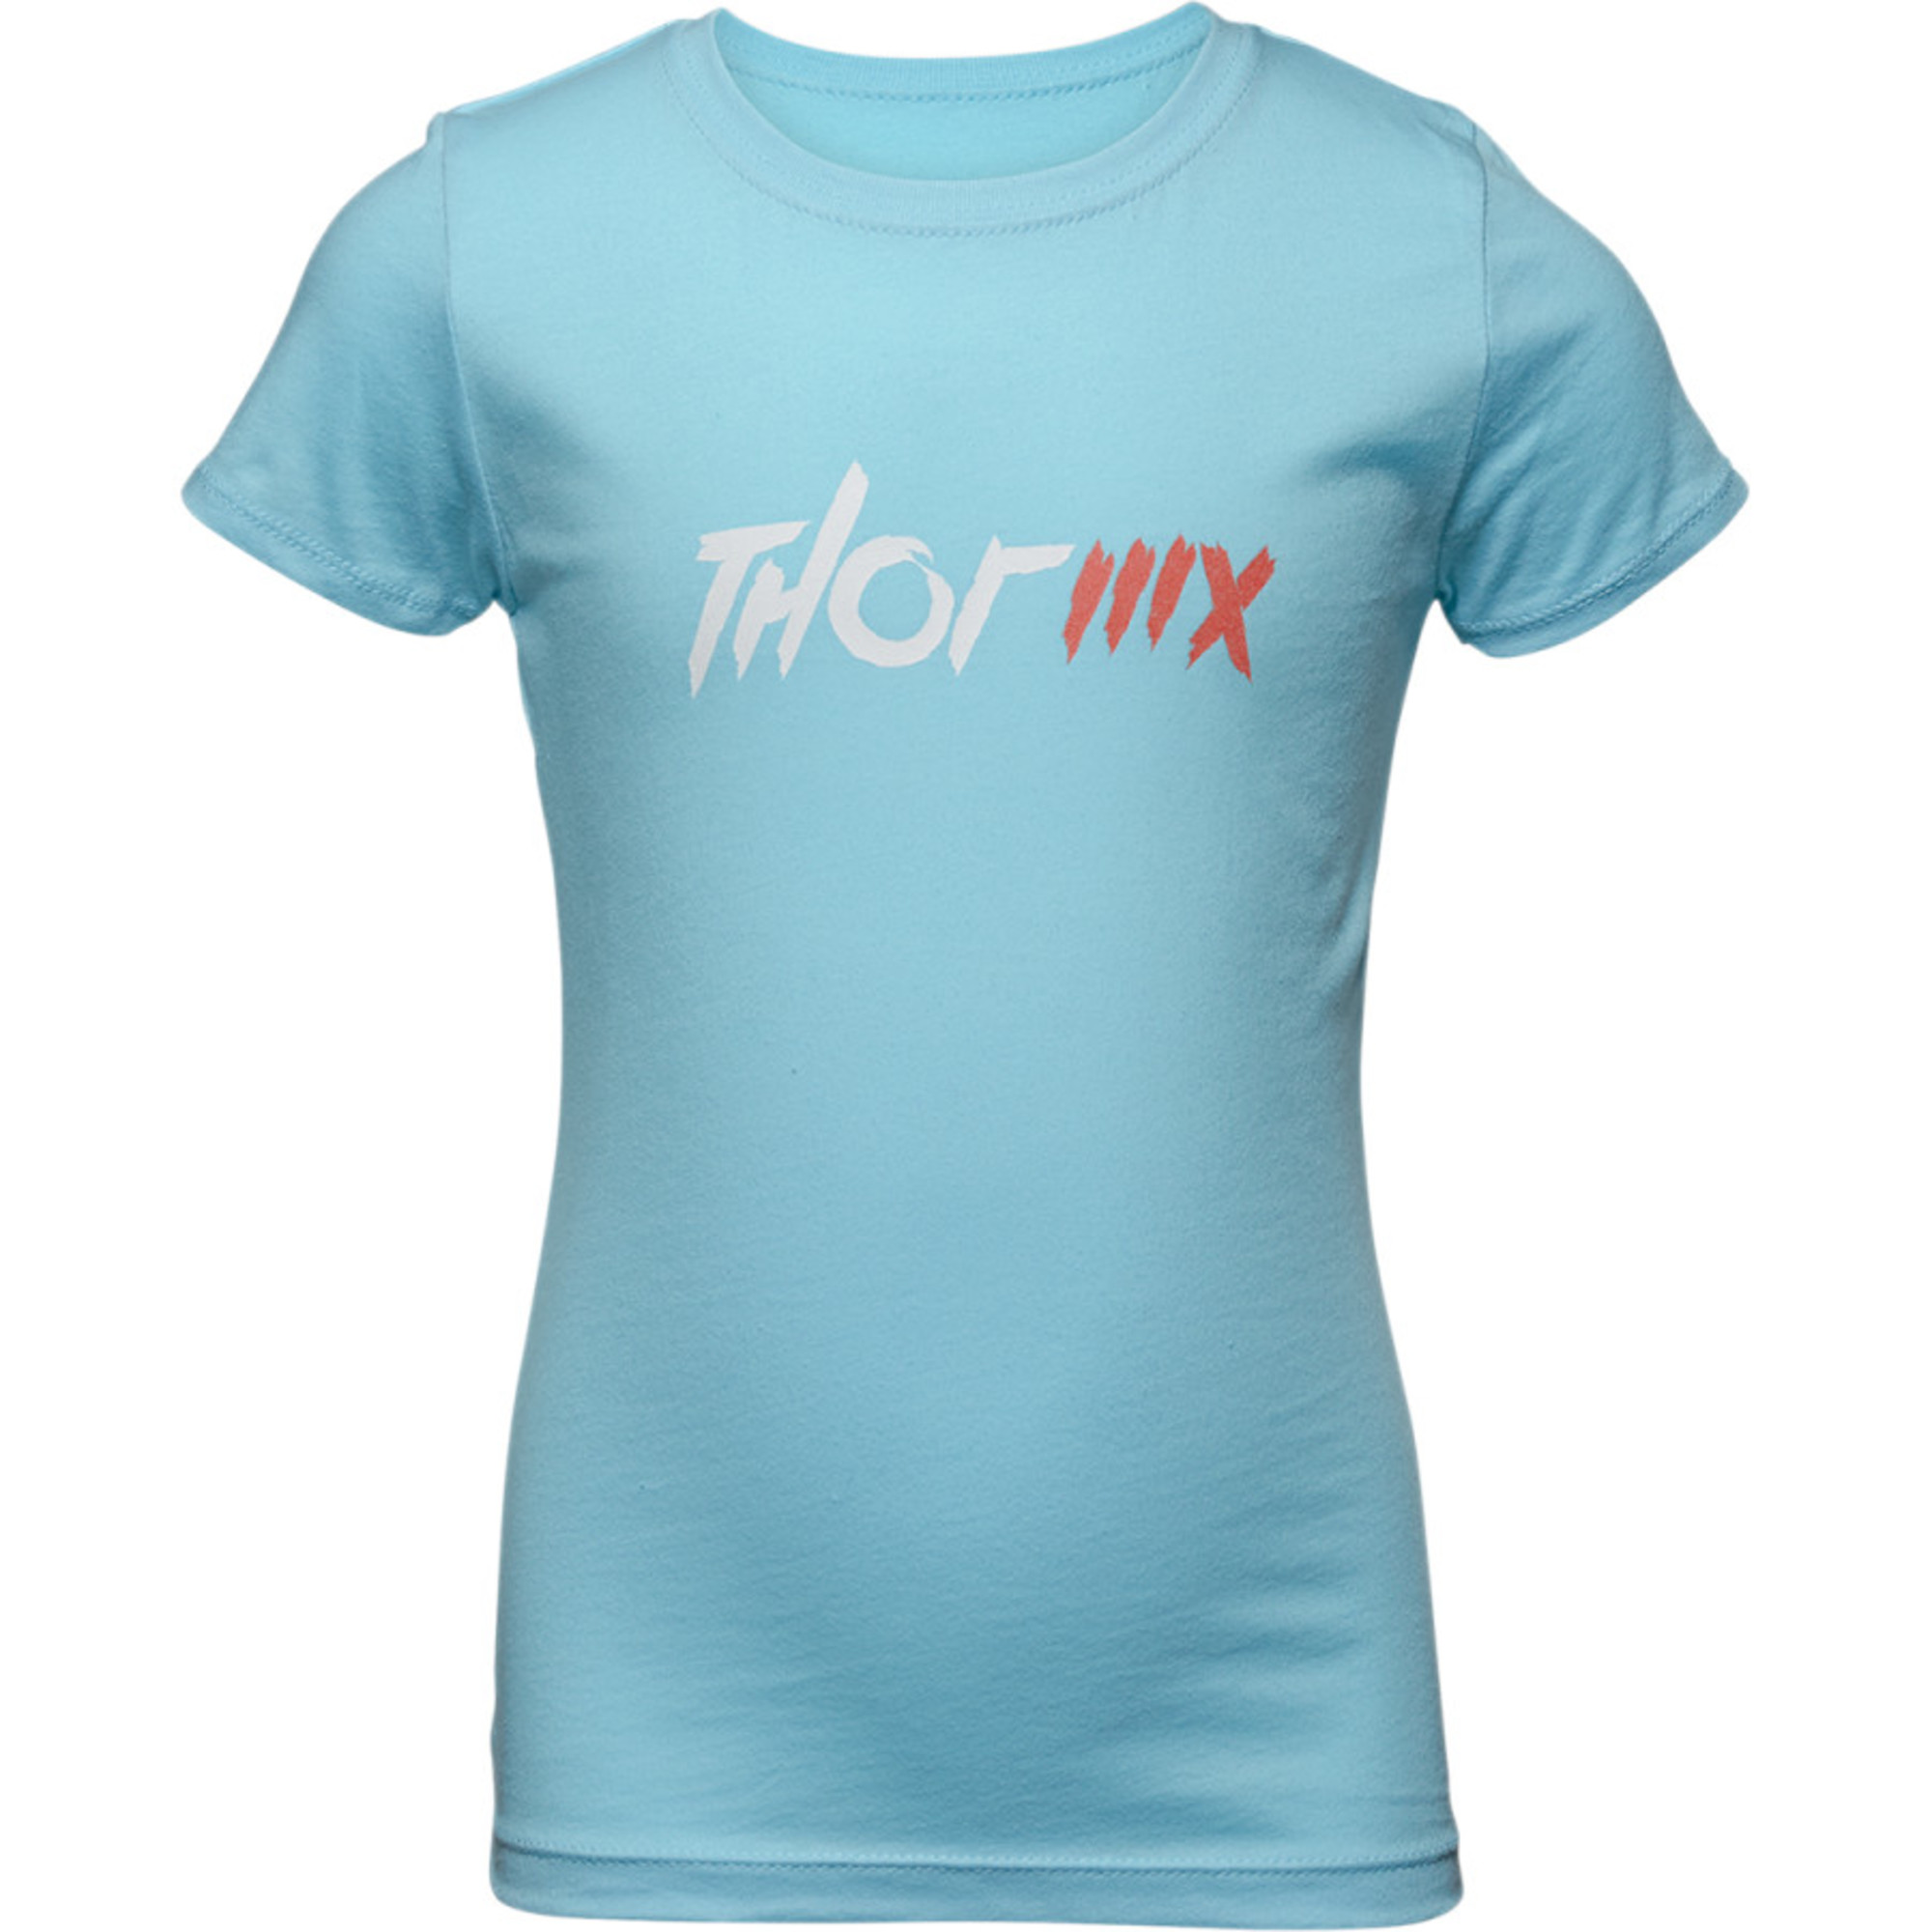 thor t-shirt shirts for kids girls mx tee